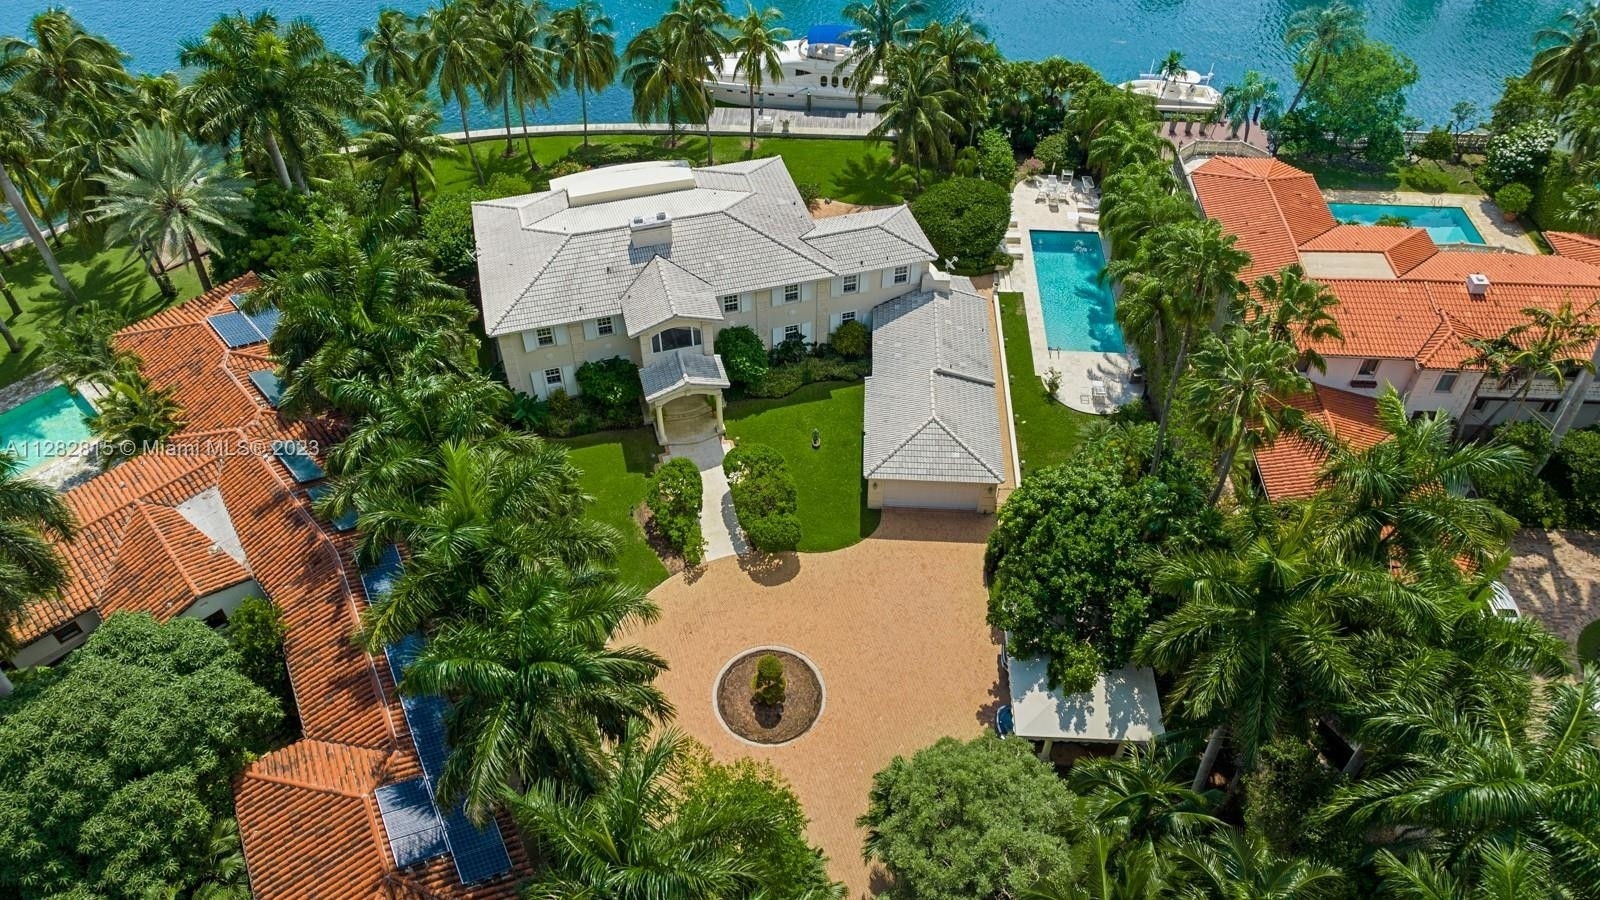 Single Family Home for Sale at Bayshore, Miami Beach, Florida 33140